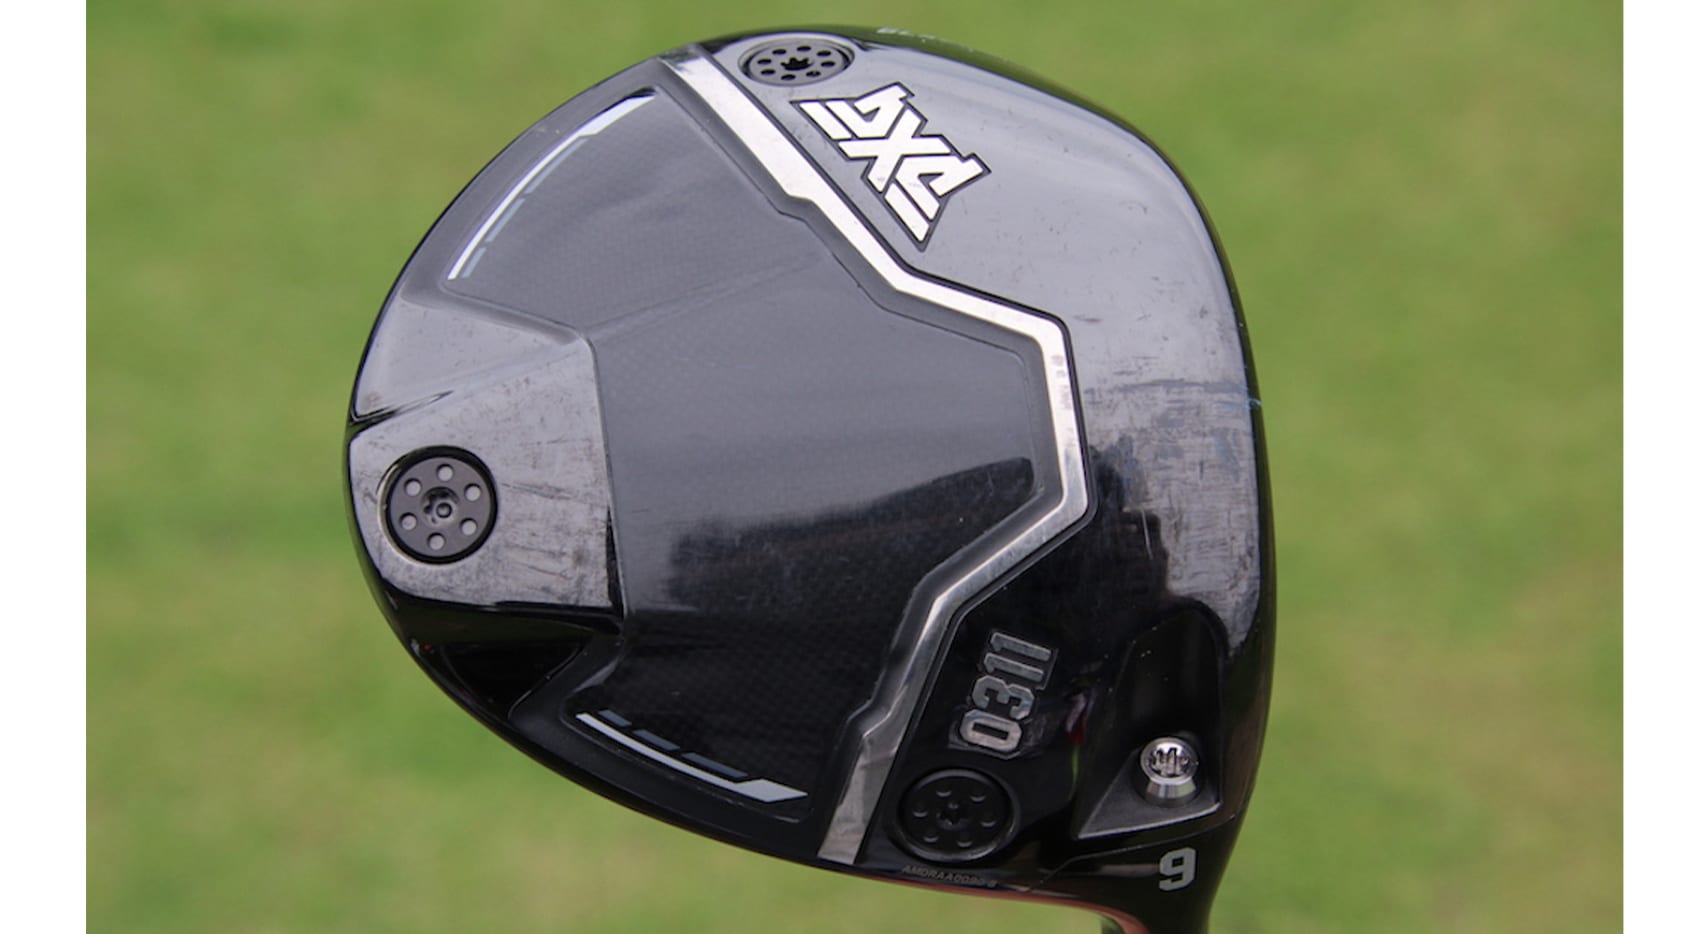 Model kepala prototipe PXG 0311 “Black Ops” baru terlihat di The RSM Classic.  (GolfWRX)